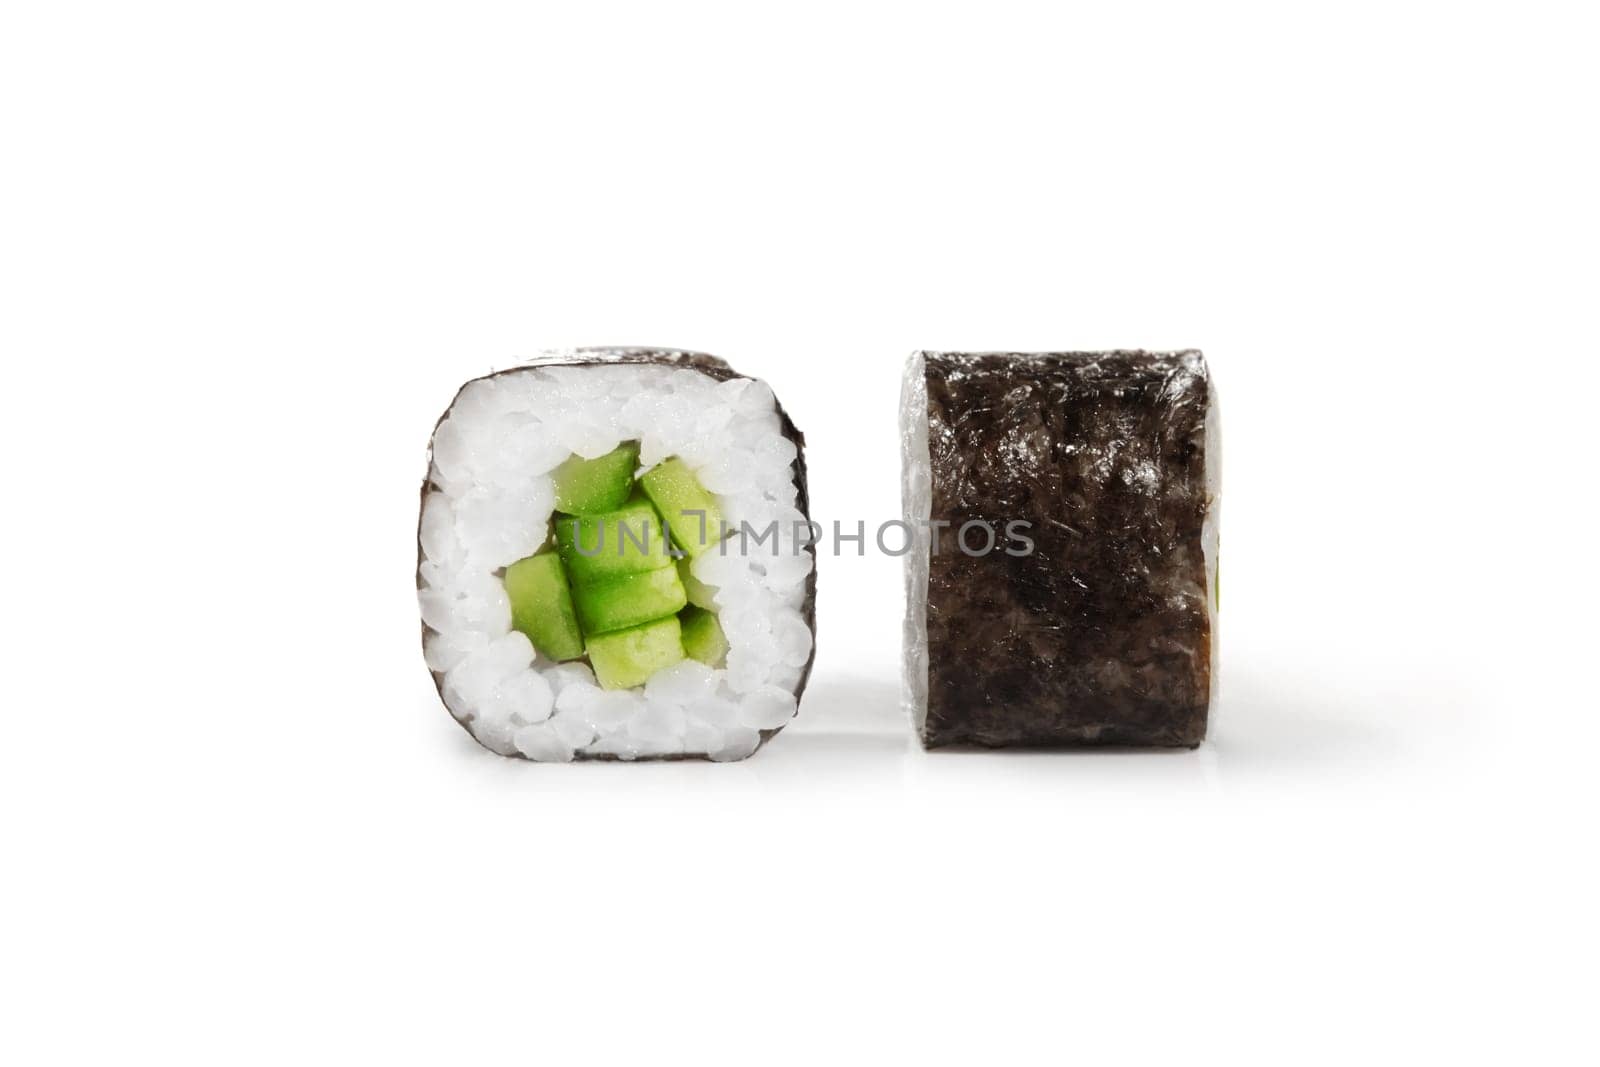 Classic kappa maki sushi rolls with cucumbers on white by nazarovsergey